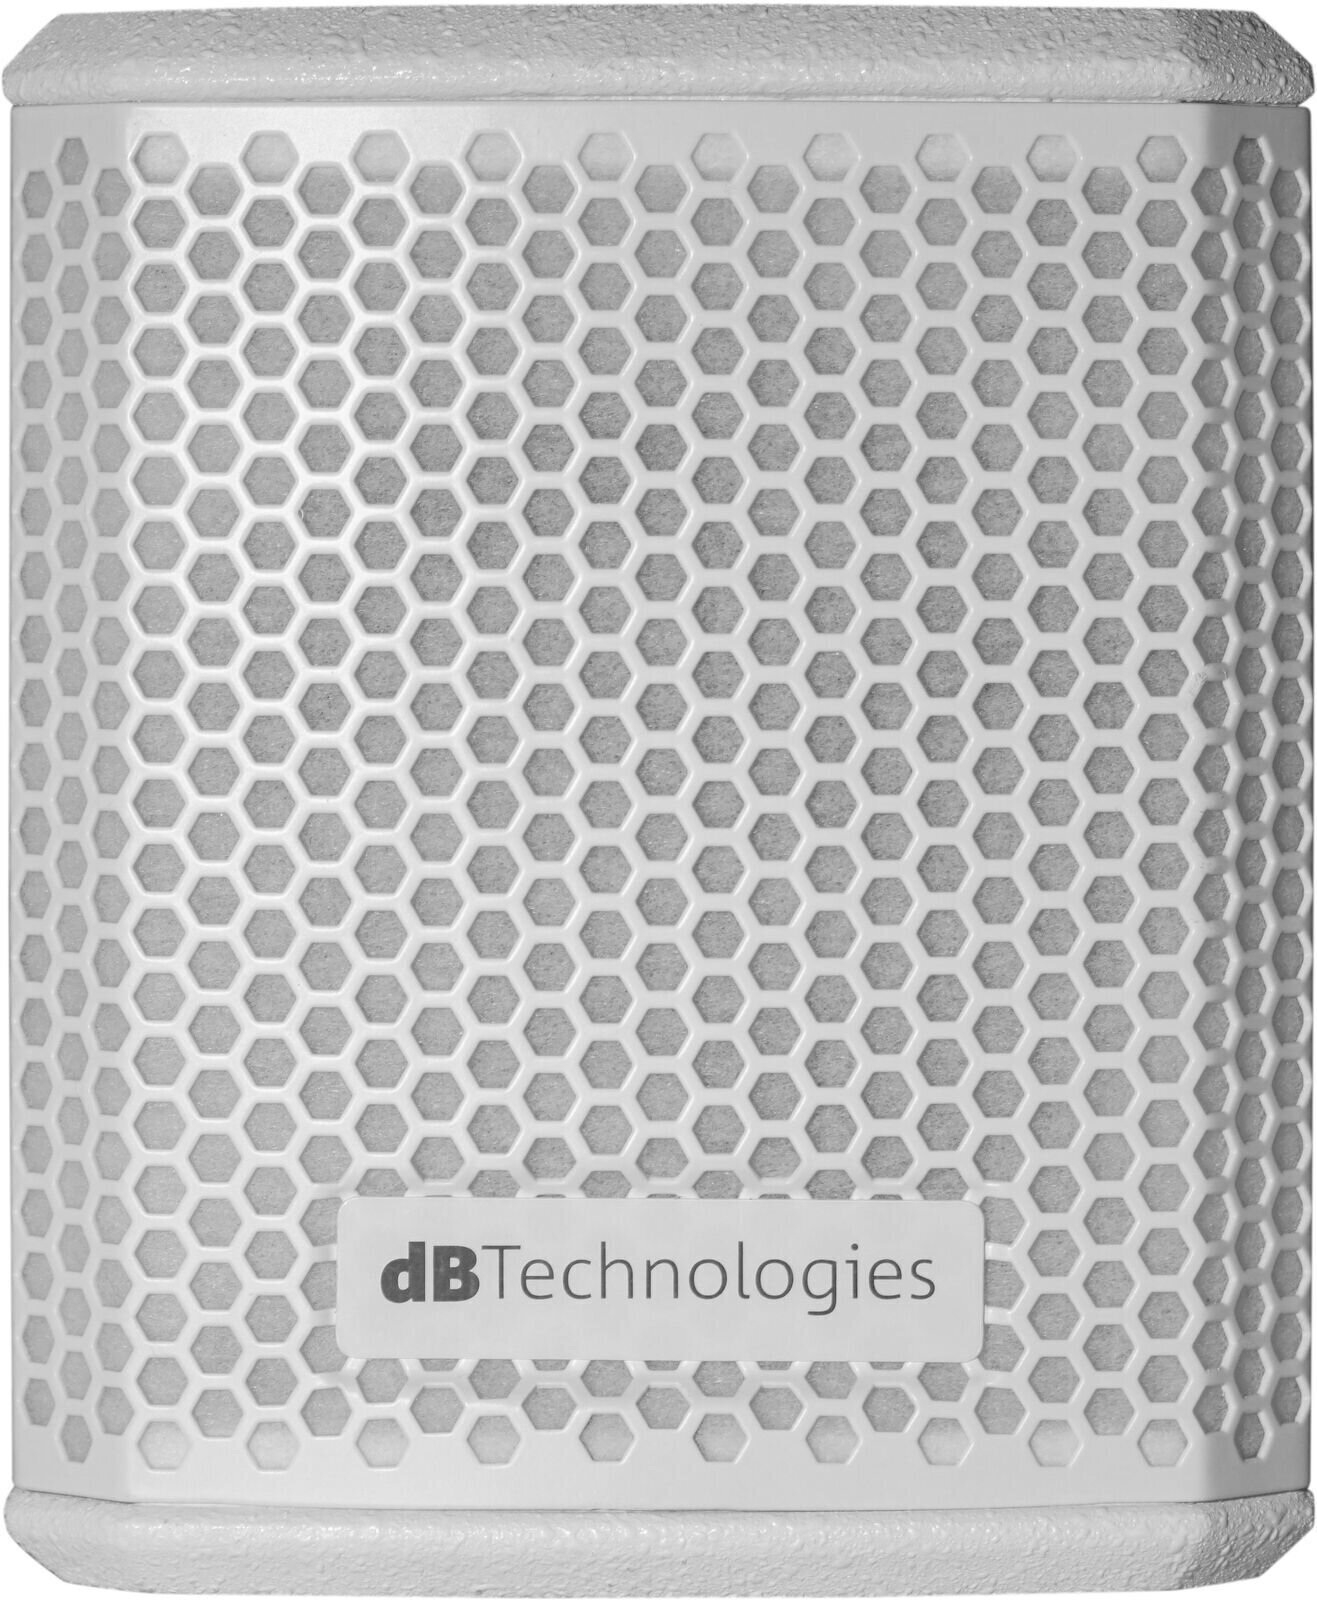 Wallmount Speaker dB Technologies LVX P5 16 OHM White